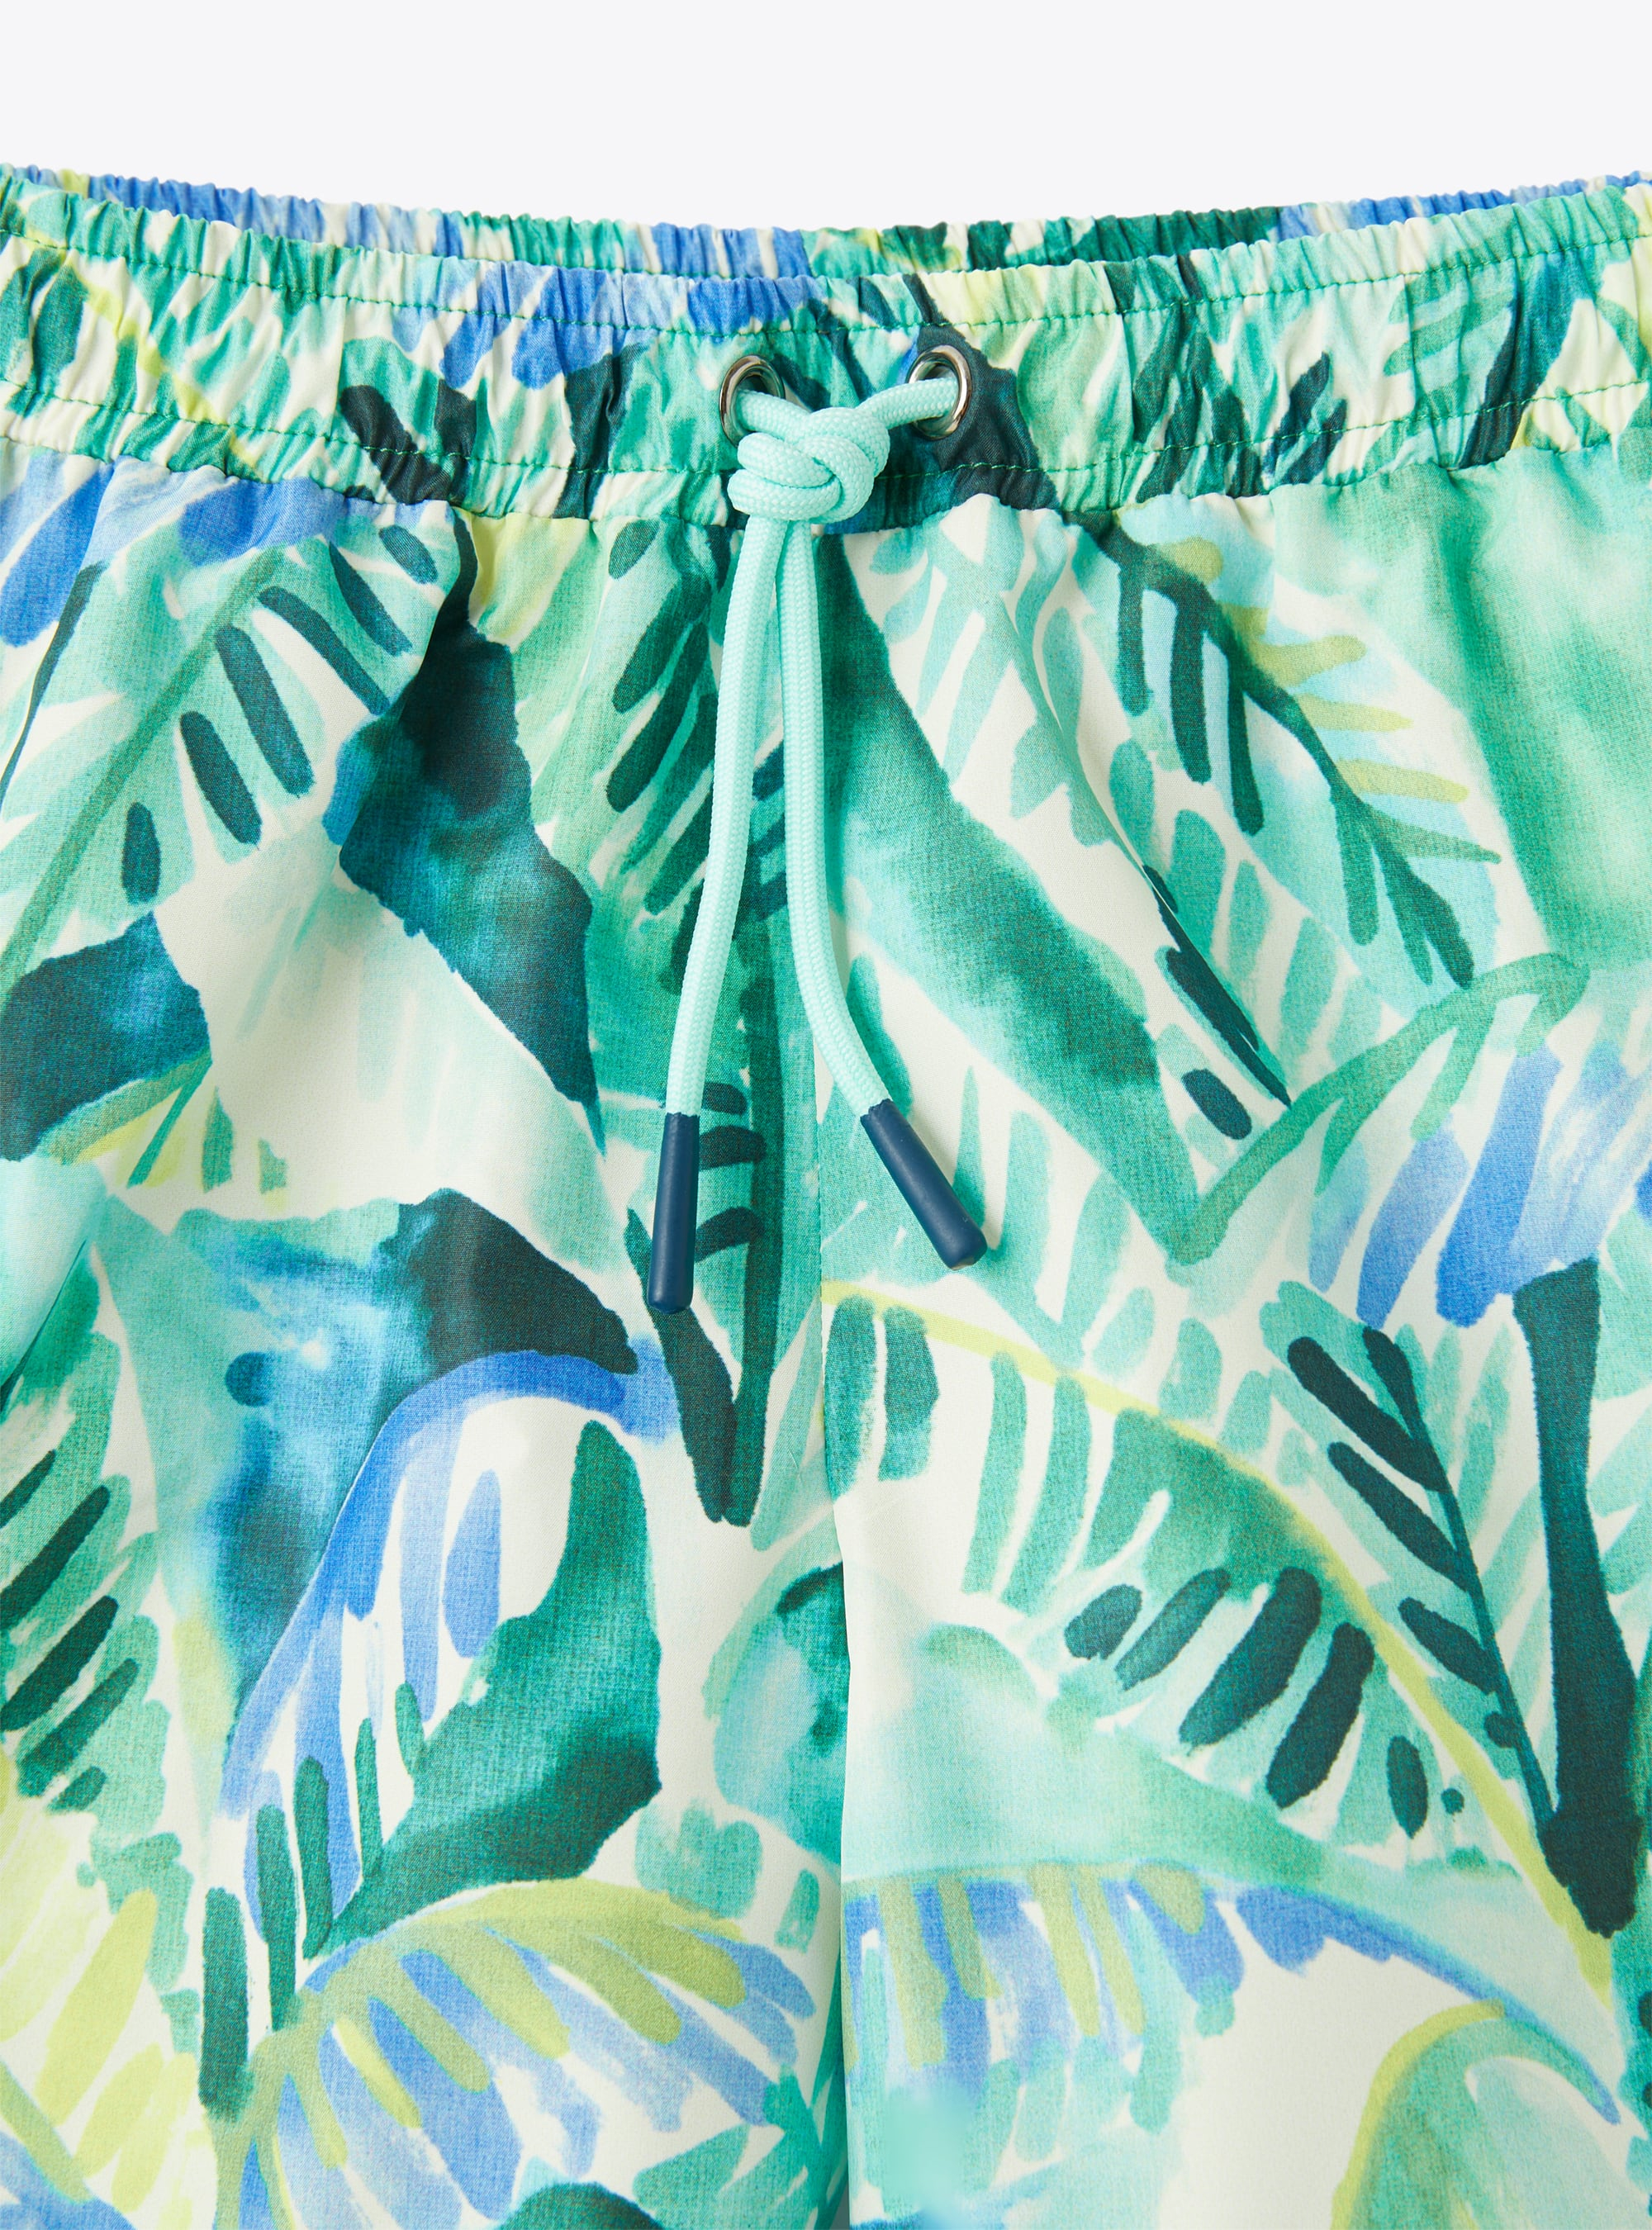 Leaf-print swim shorts - Green | Il Gufo